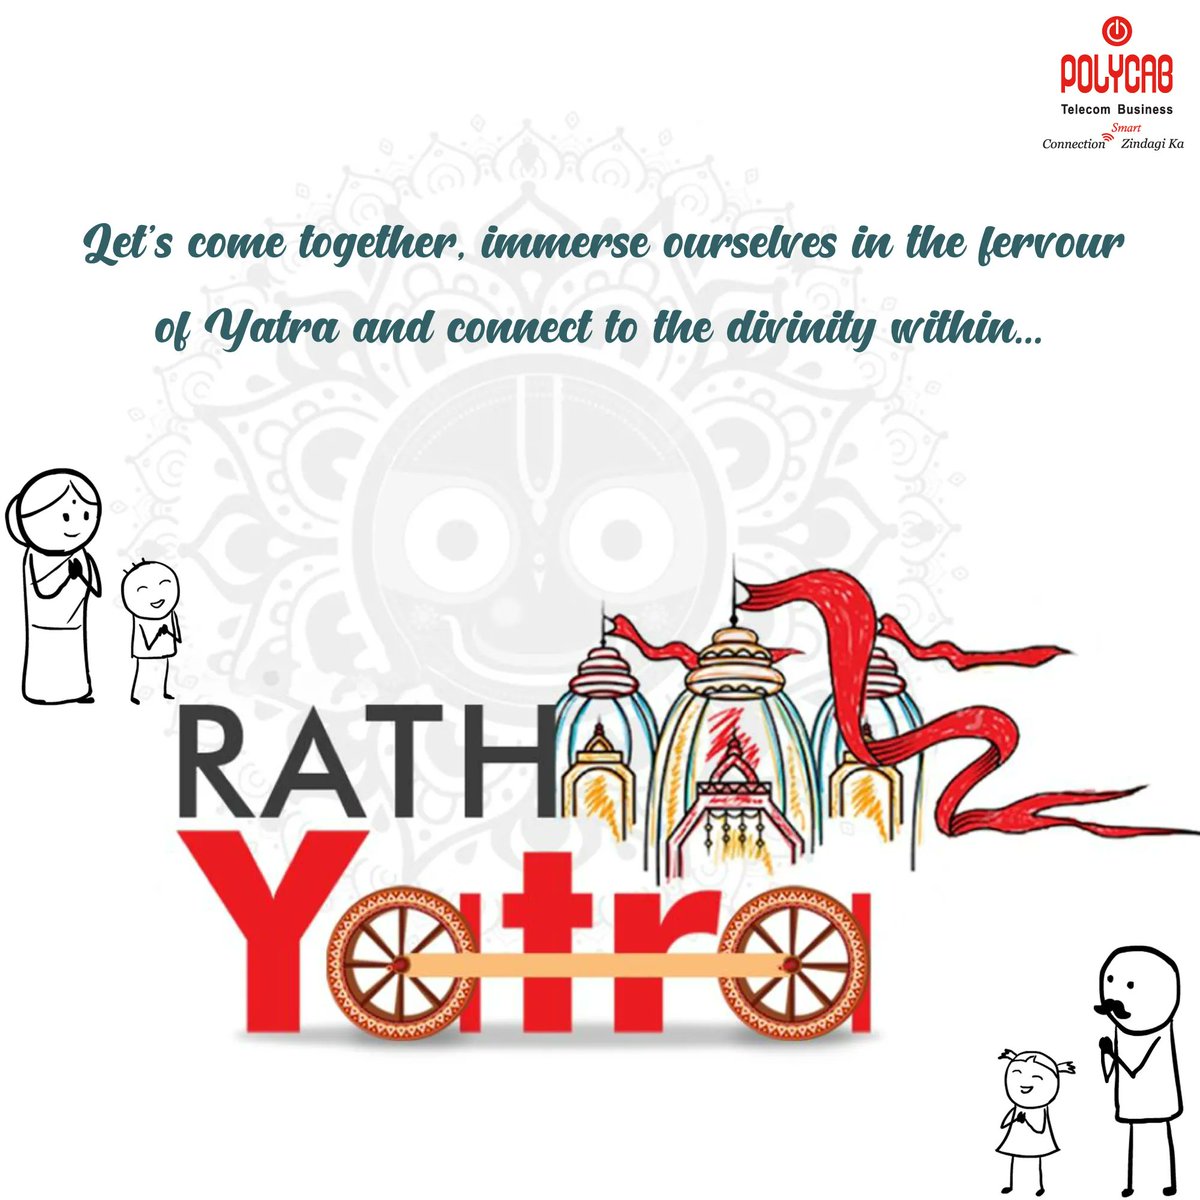 Happy Rath Yatra

#happy #lordjagannath #rathyatra #celebration #polycabtelecom #polycab #vocalforlocal #digitalindia #makeinindia #atmanirbharbharat @PolycabIndia